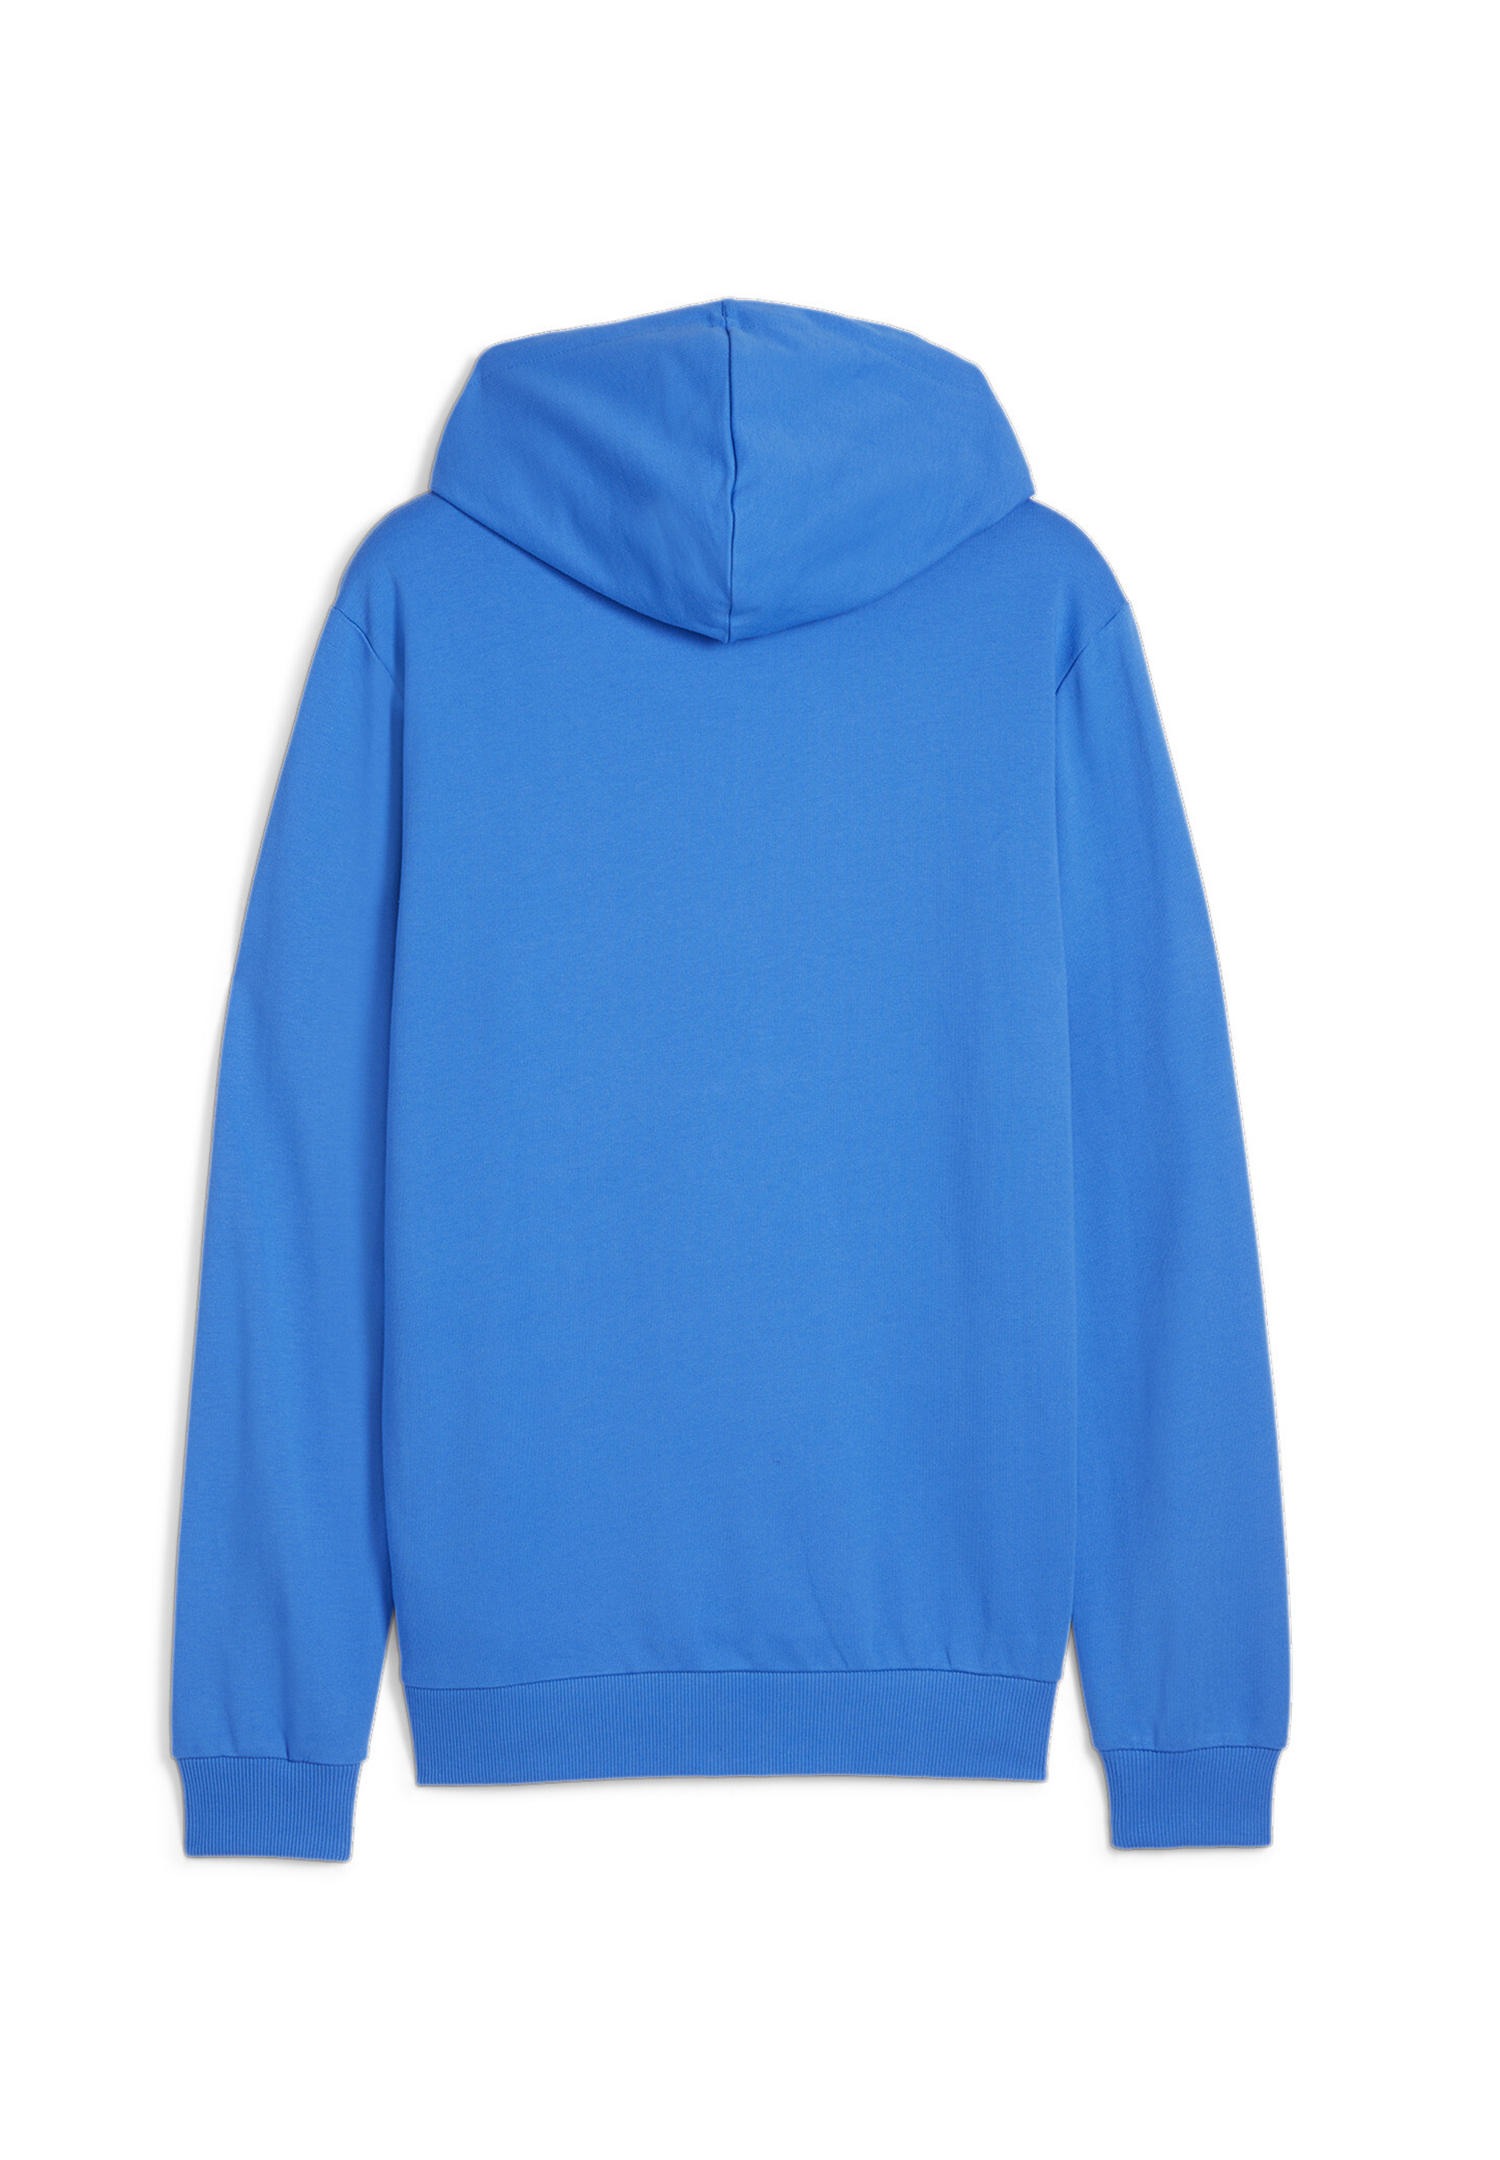 PUMA Herren teamGOAL Casuals Hoody Sweatshirt Pullover 658618 Blau 